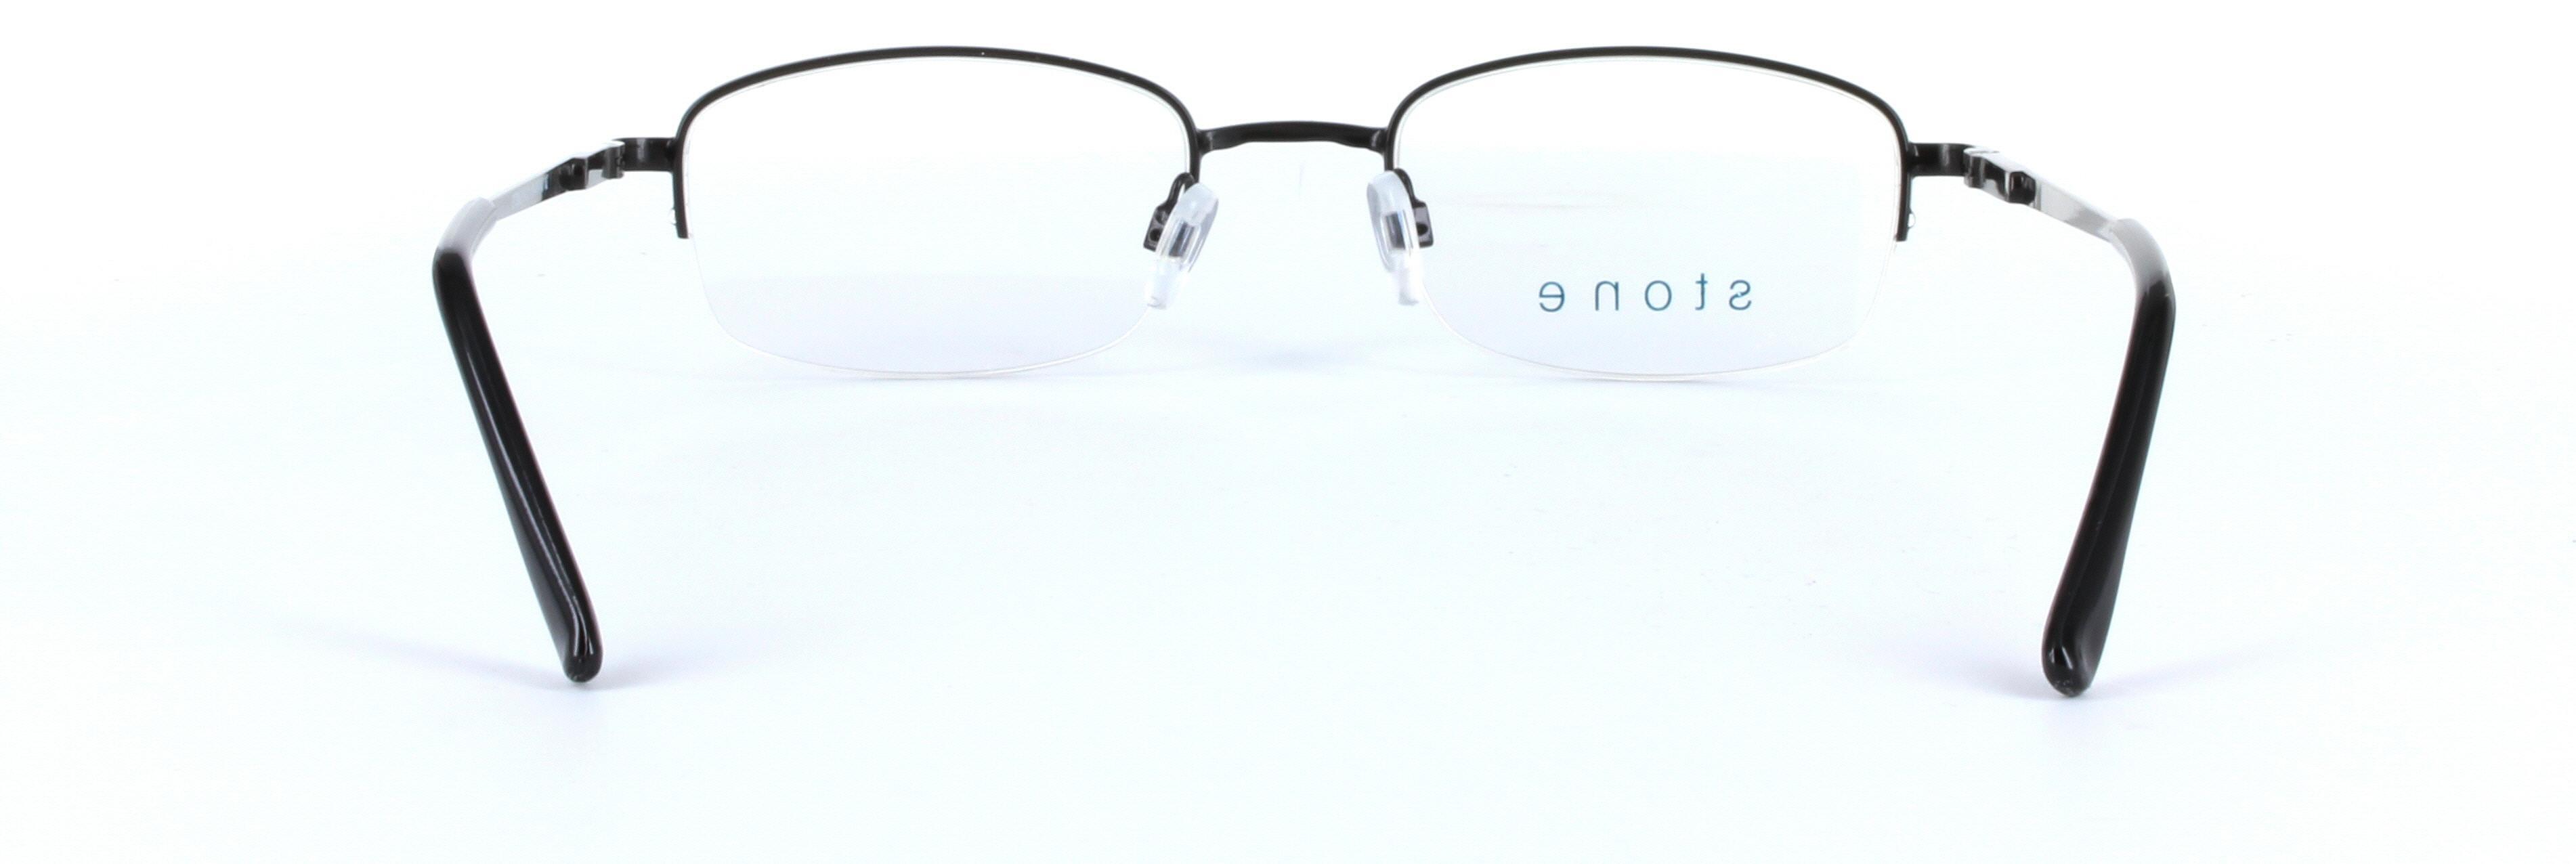 Black Semi Rimless Rectangular Metal Glasses Harry - Image View 3